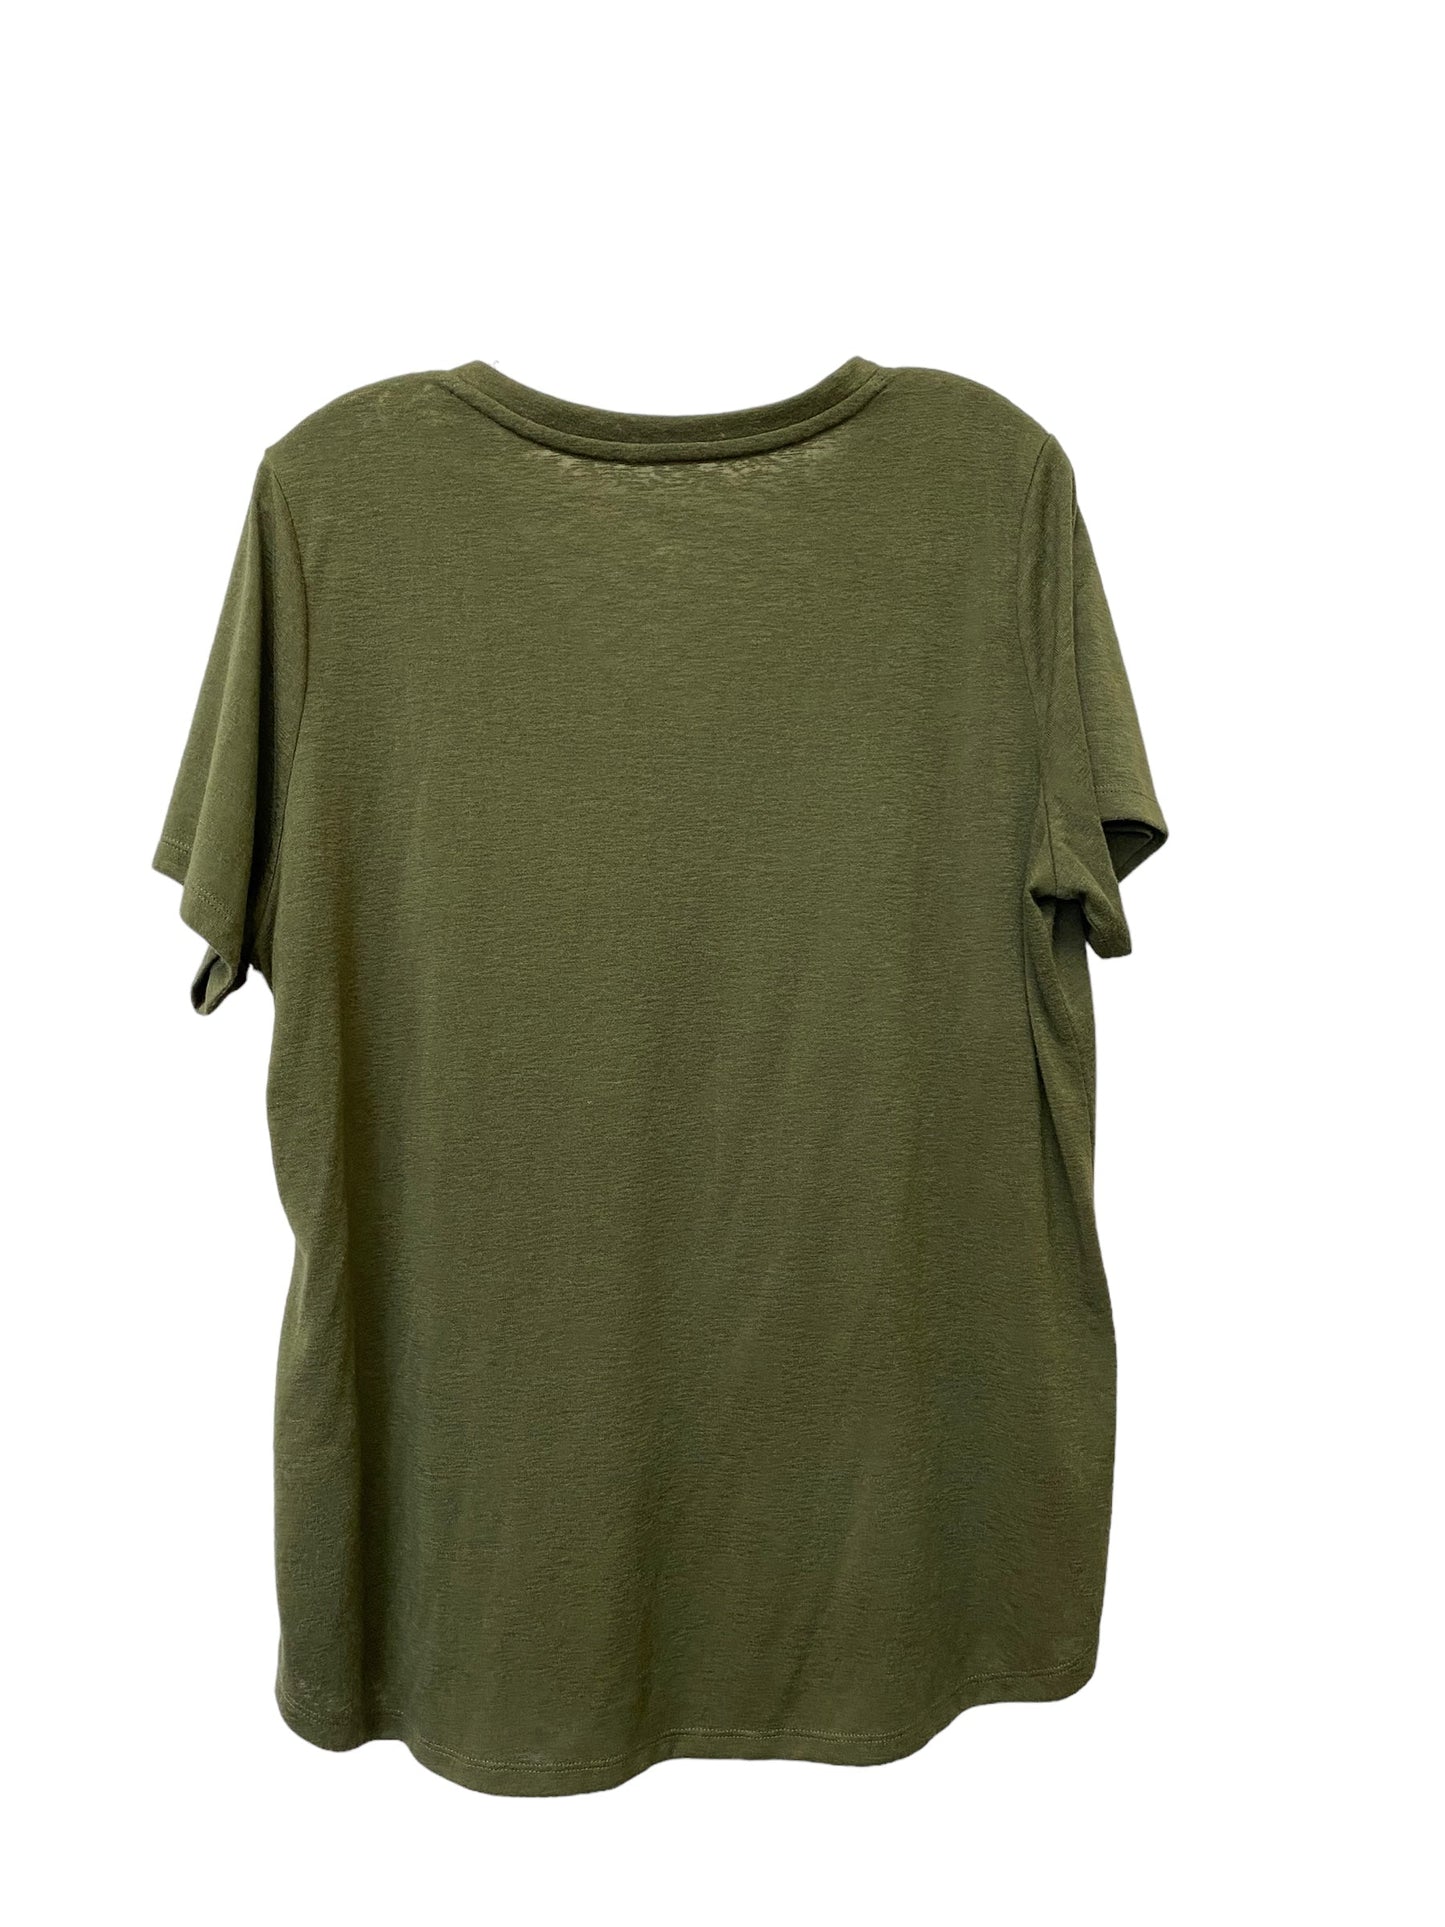 Green Top Short Sleeve Basic Gap, Size Xl